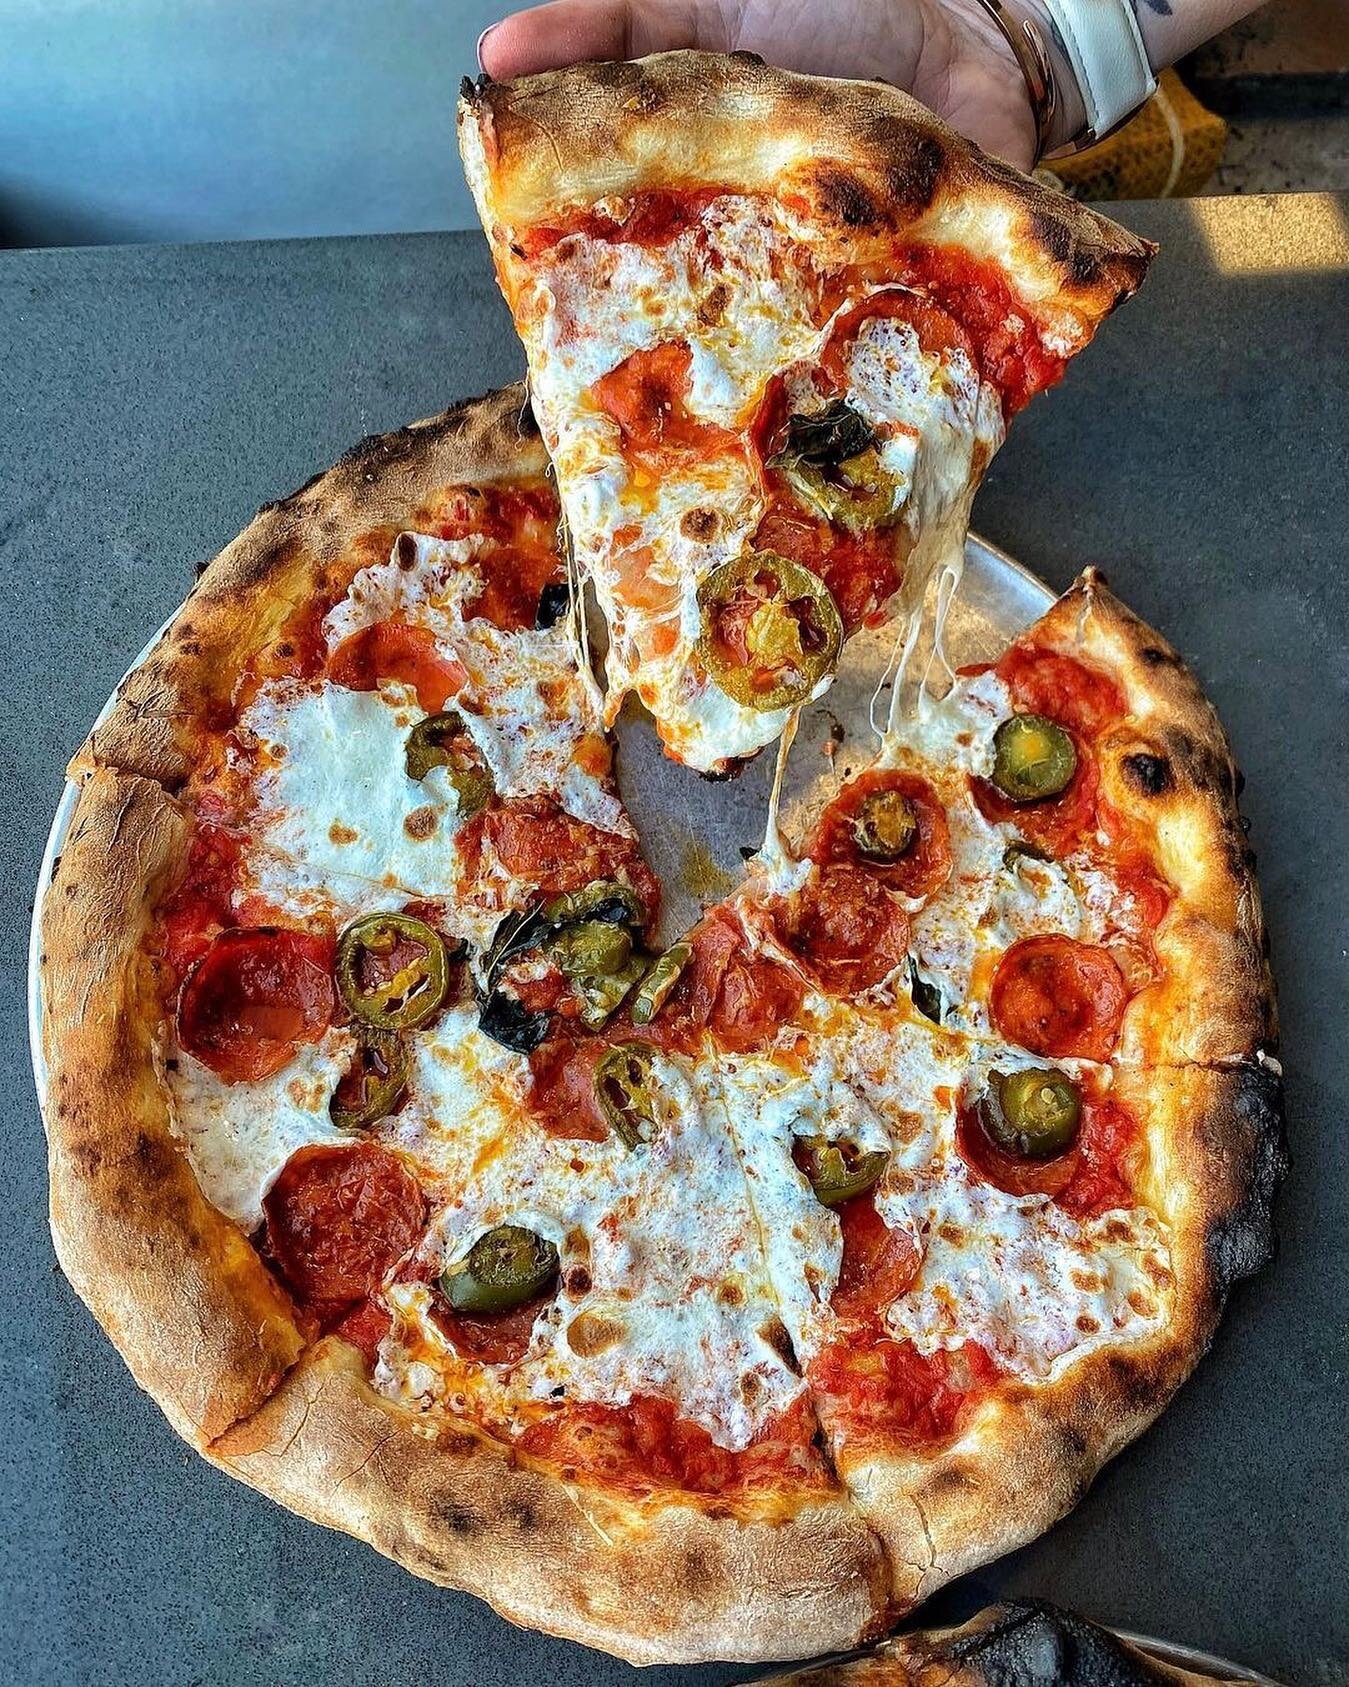 Go ahead, grab a slice! 🍕🤤🍕
🔥 Try our signature 1653 PIZZA - Tomato Sauce, Mozzarella, Rosa Grande Pepperoni, Jalape&ntilde;o.
#1653PIZZACOMPANY
#Huntington #LongIsland